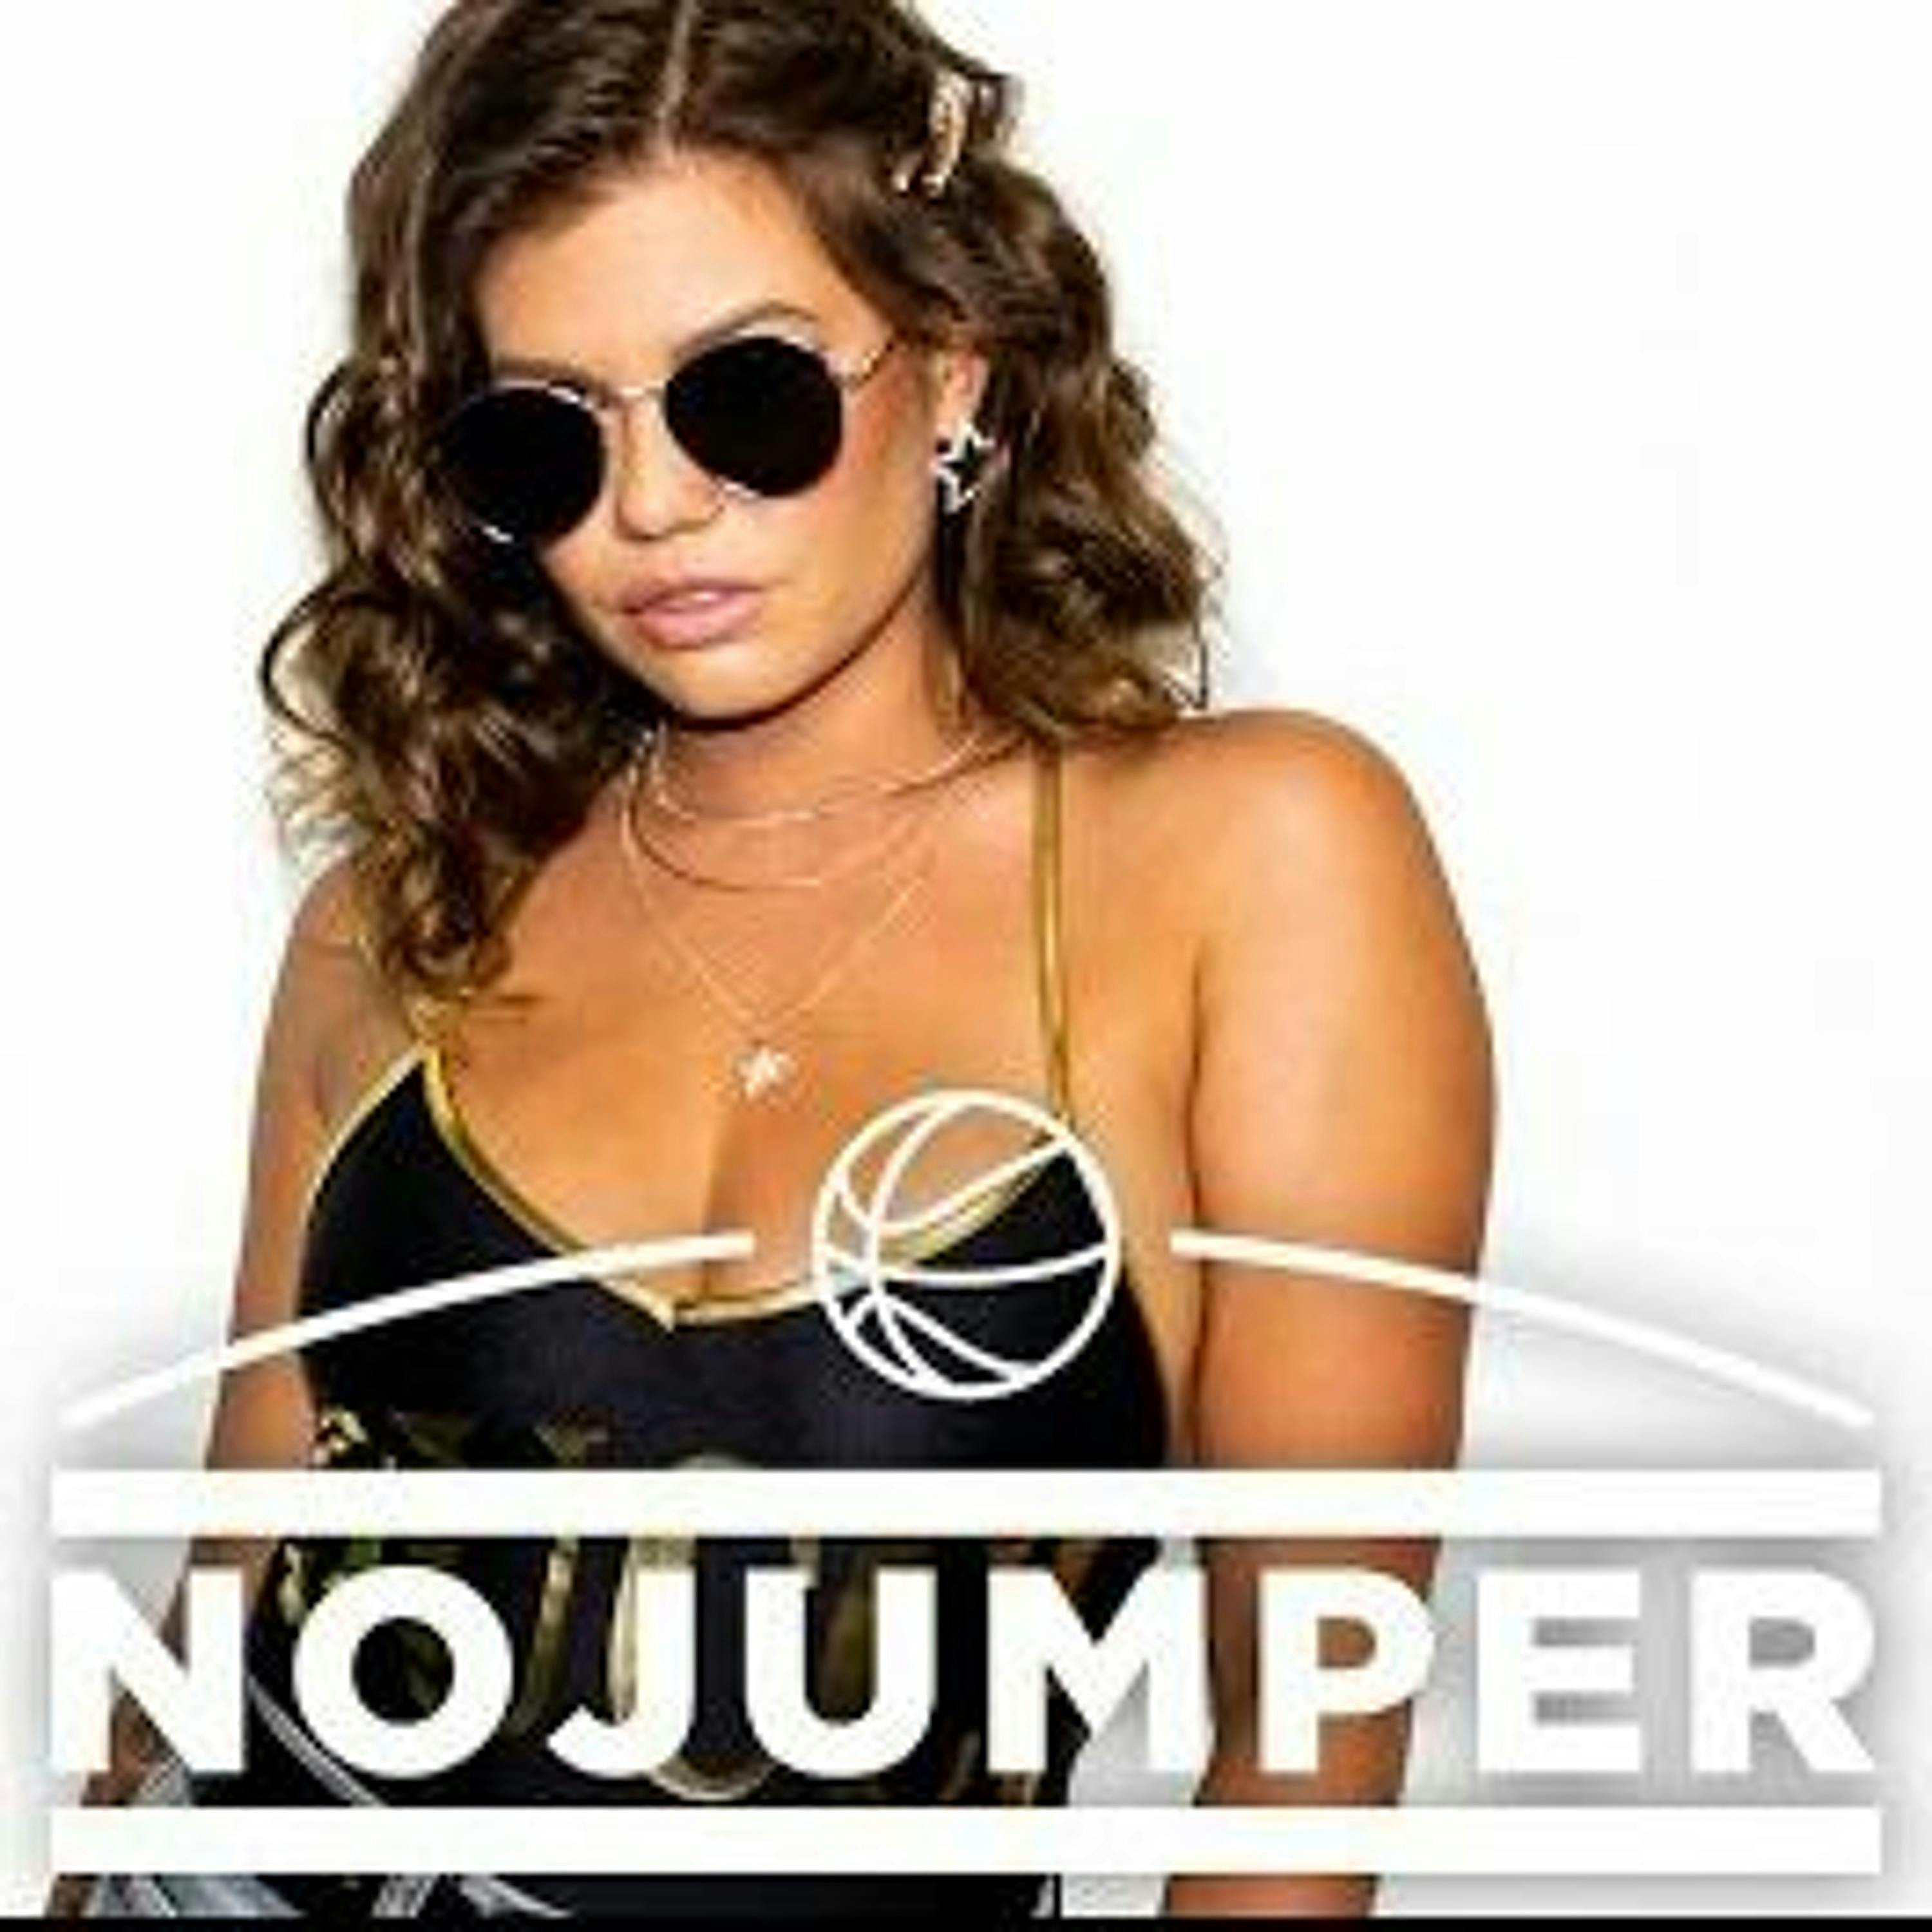 Chanel West Coast Gets Drilled - Chanel West Coast on Club Freak Out Video, Nicki Minaj drama, Charlamagne â€“  No Jumper â€“ Podcast â€“ Podtail